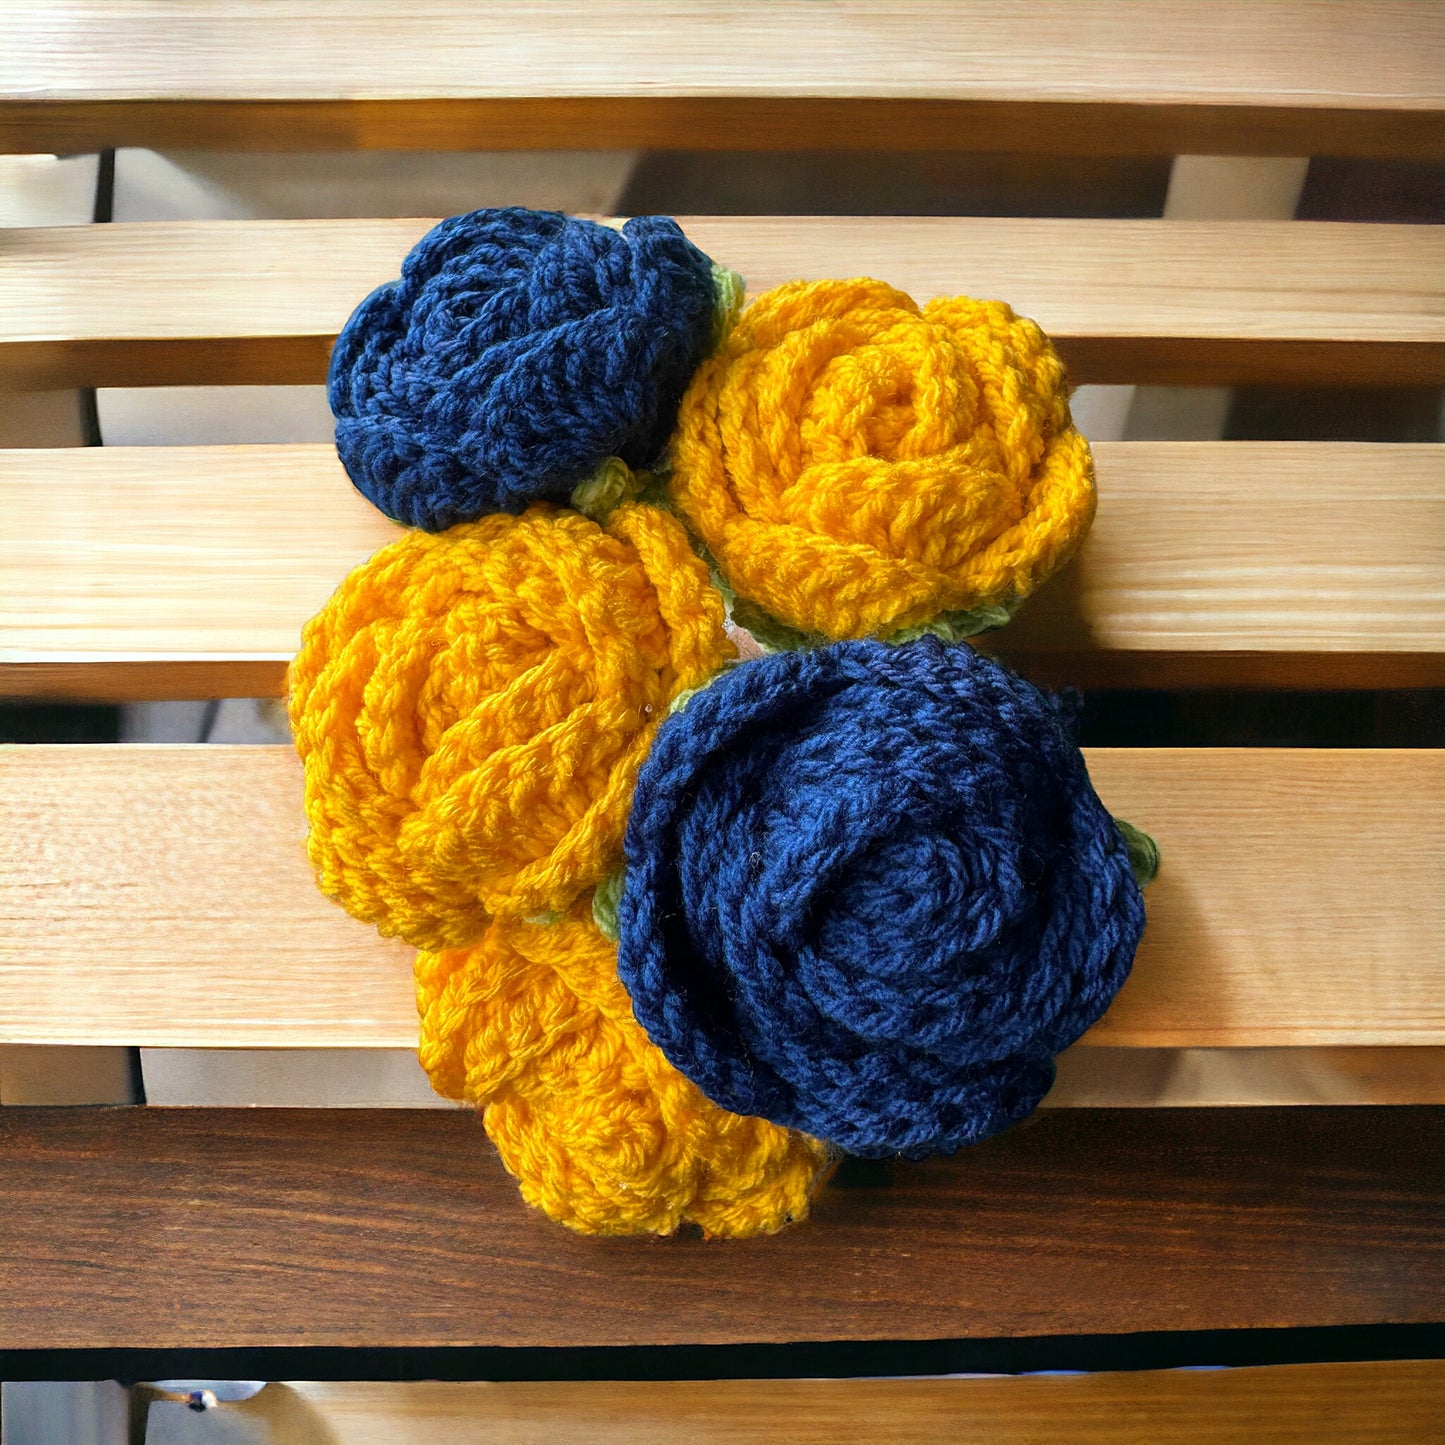 Crochet Rose Stem | Bouquet